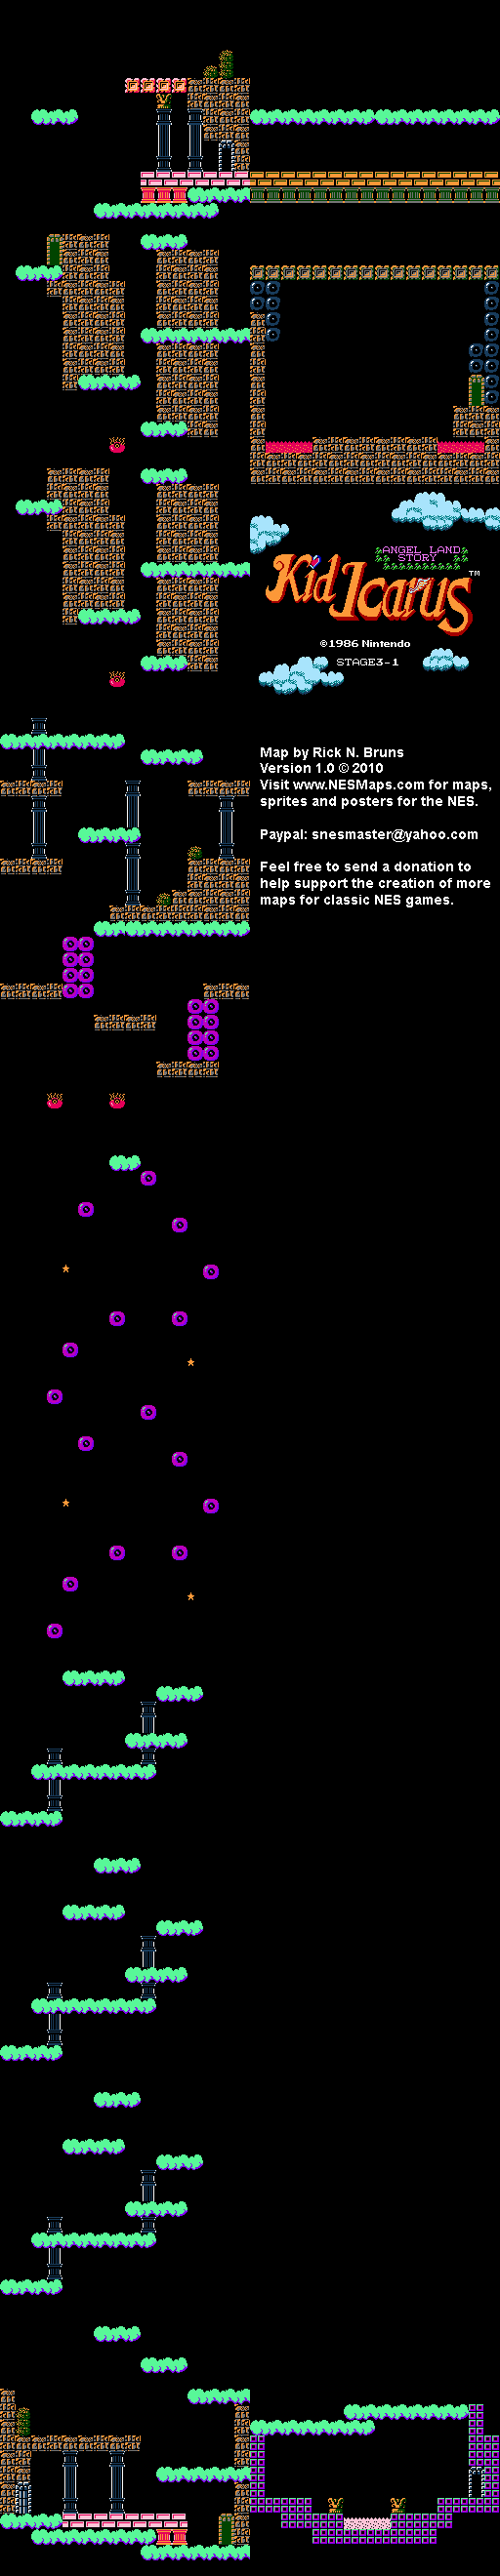 Kid Icarus - Stage 3-1 - NES Map BG